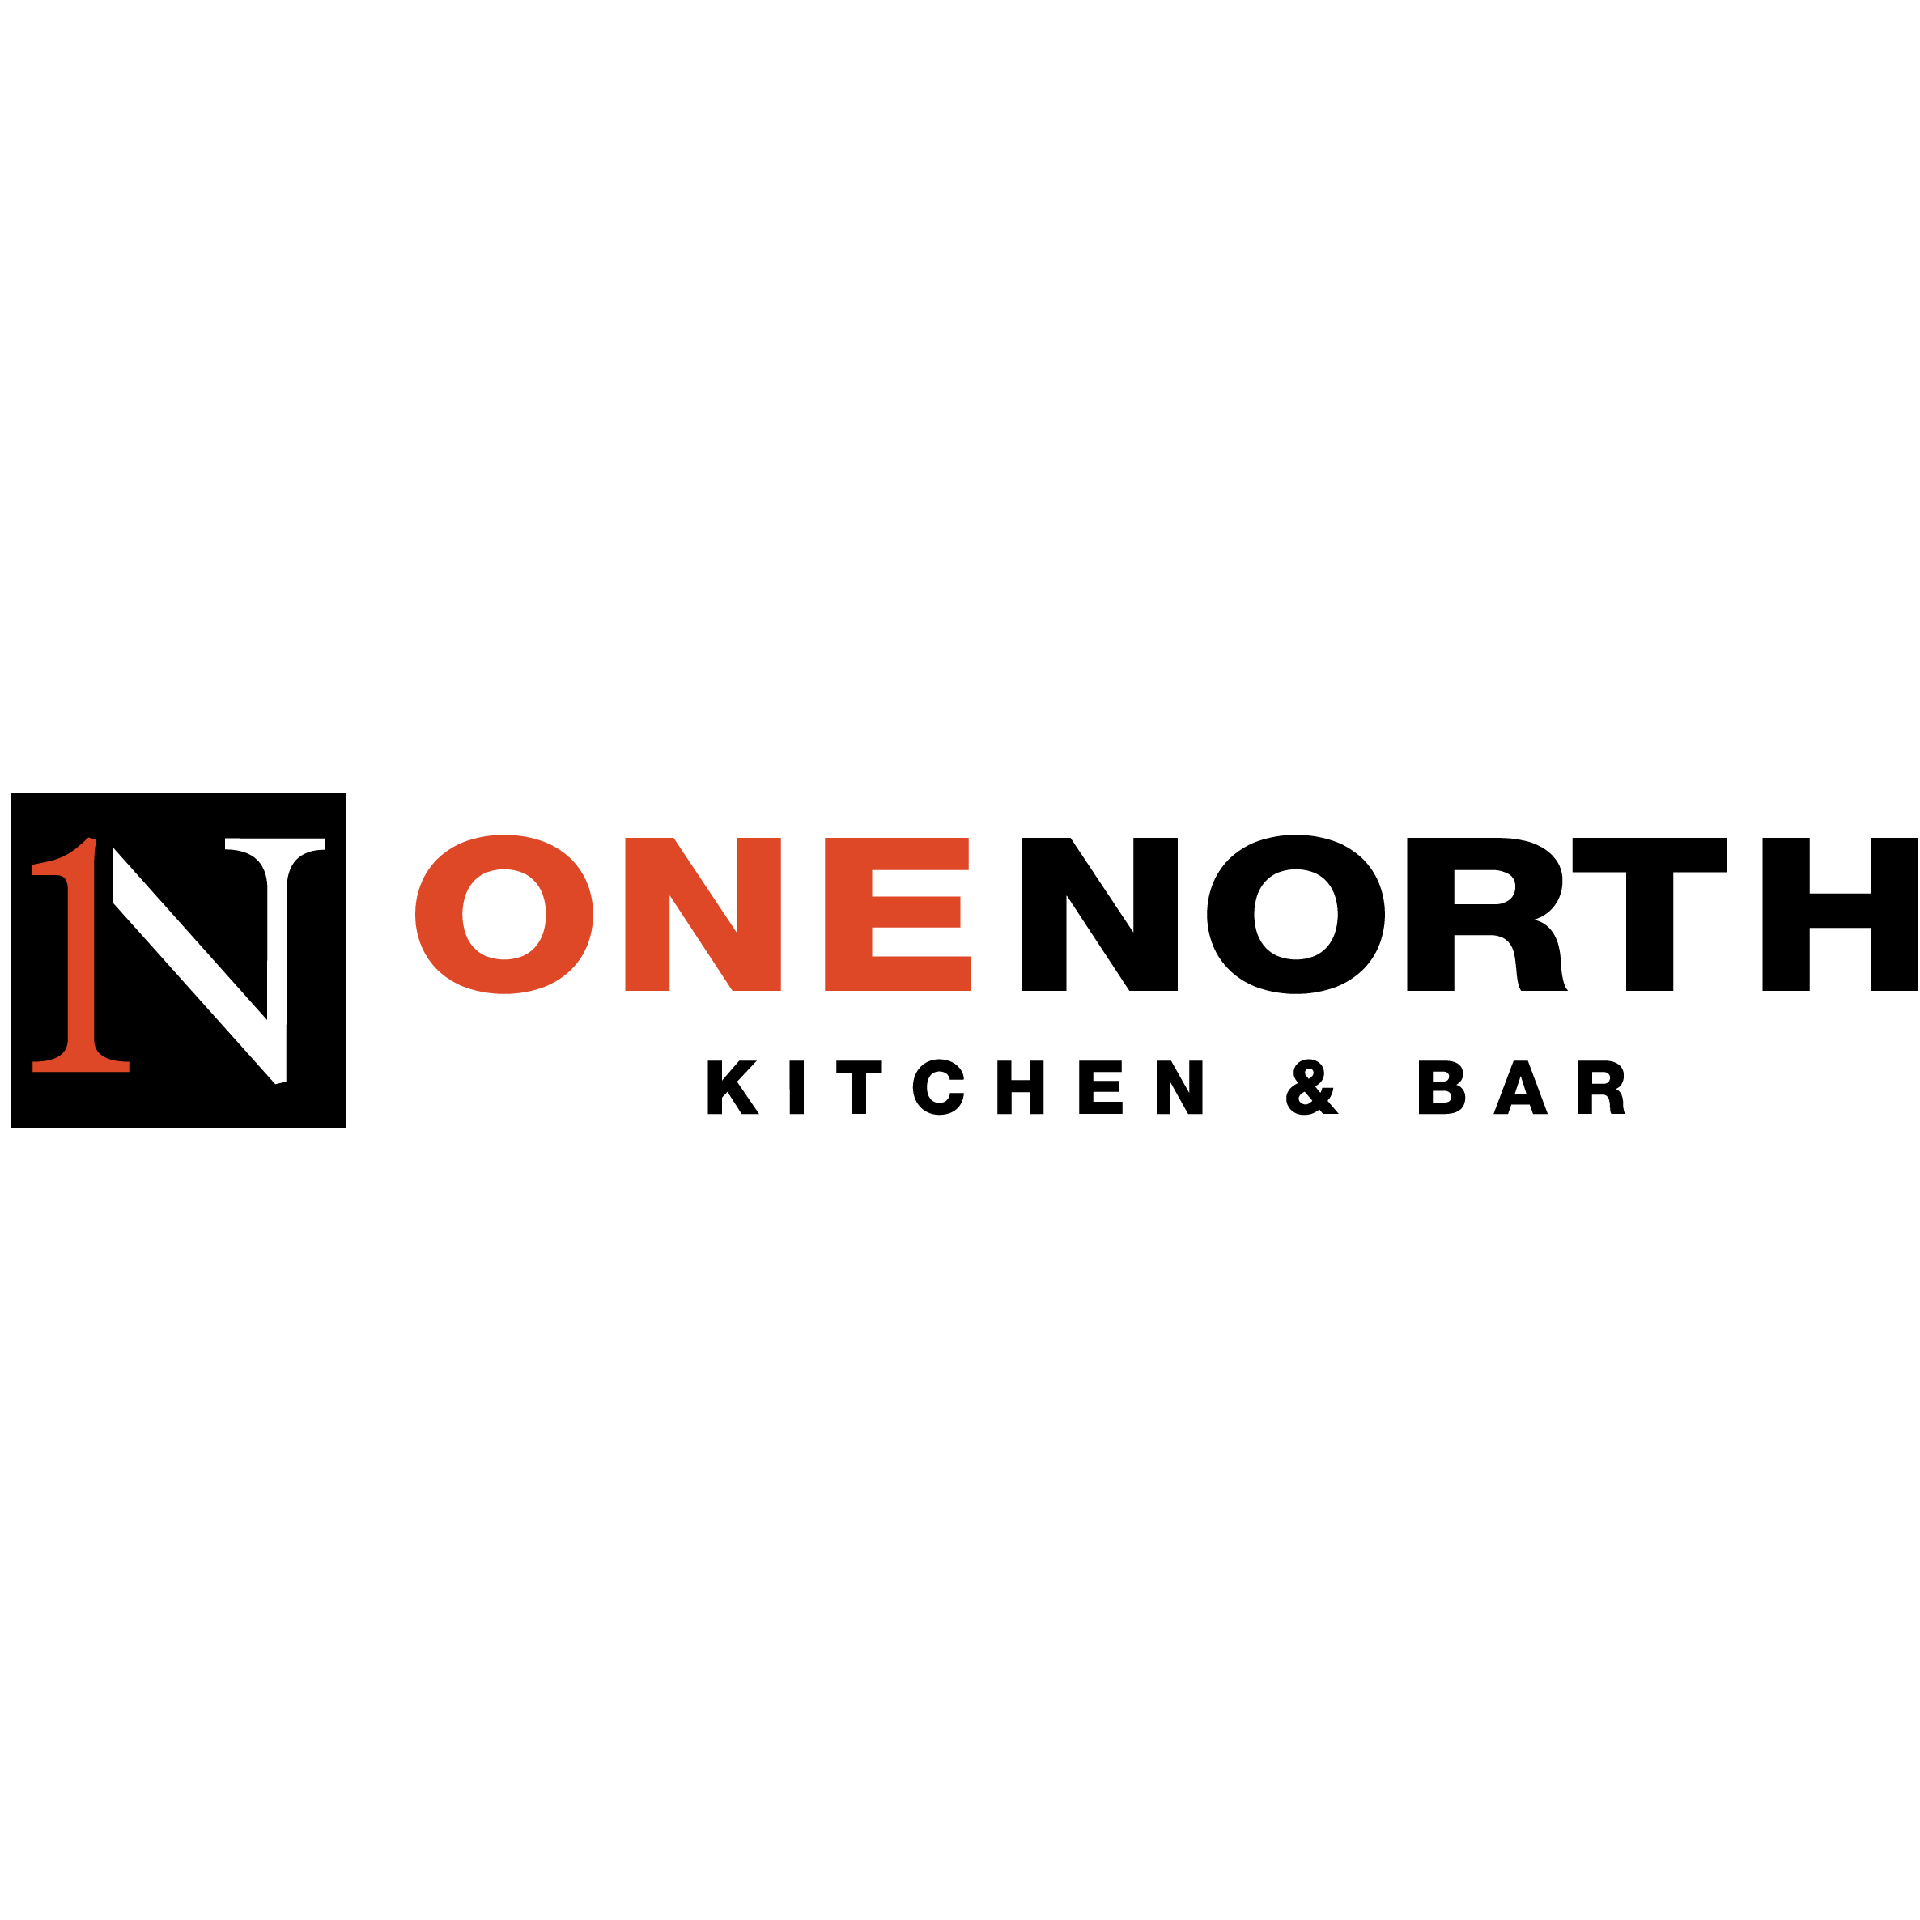 One North Kitchen & Bar - Jackson, MI 49202 - (517)962-5056 | ShowMeLocal.com